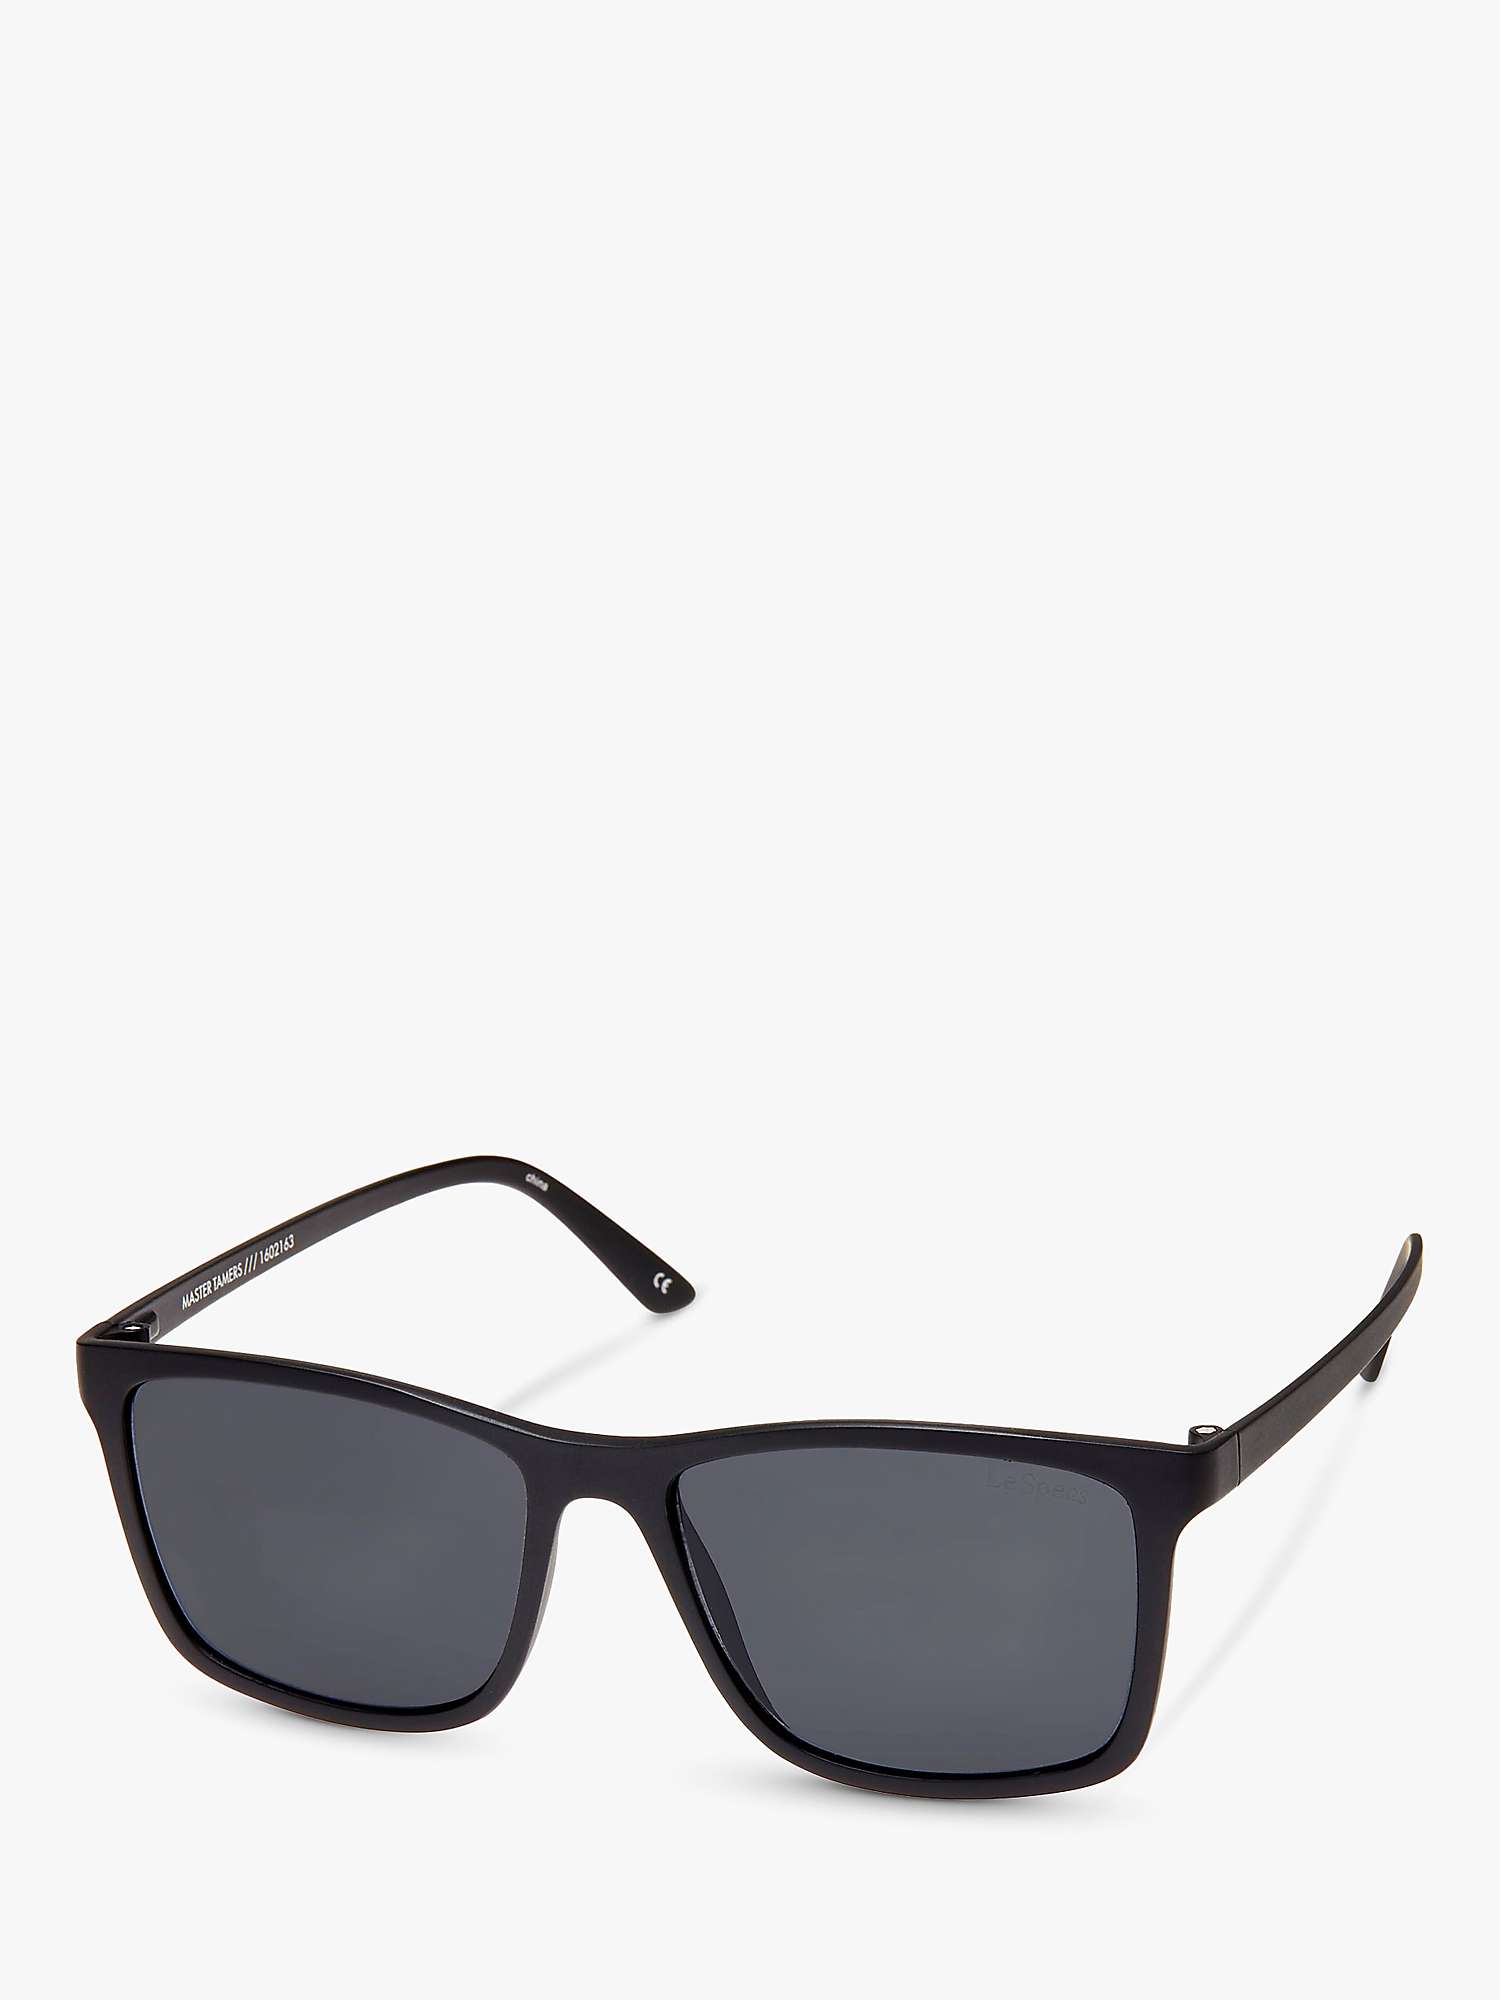 Buy Le Specs L5000181 Men's Master Tamers Rectangular Sunglasses, Black/Grey Online at johnlewis.com